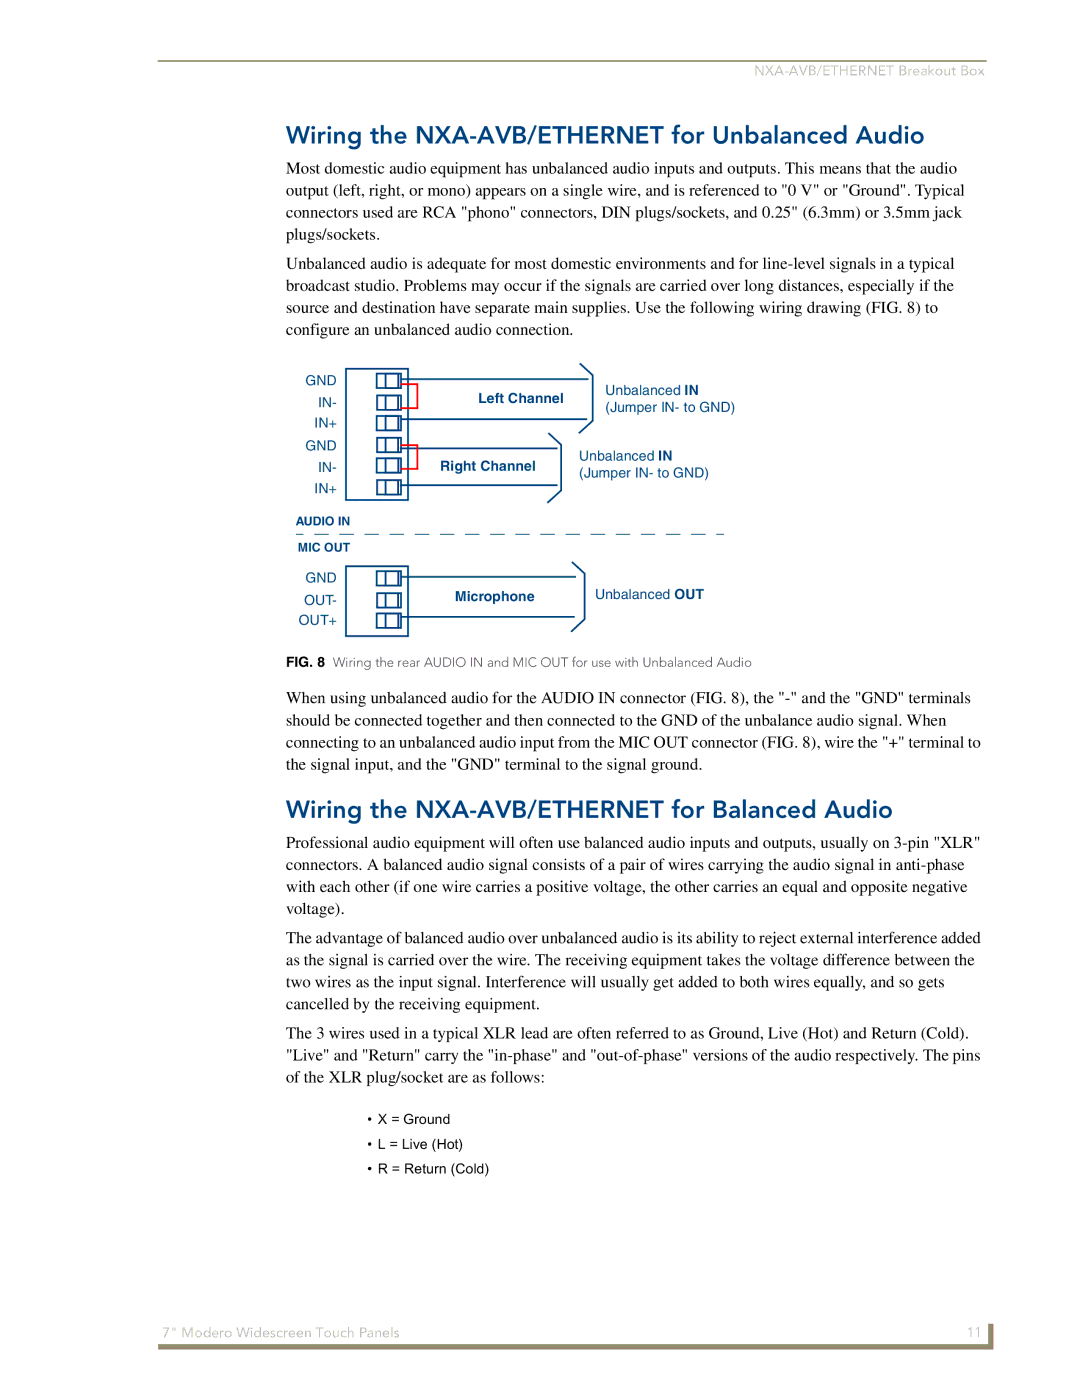 AMX NXD-700Vi manual Wiring the NXA-AVB/ETHERNET for Unbalanced Audio, Wiring the NXA-AVB/ETHERNET for Balanced Audio 